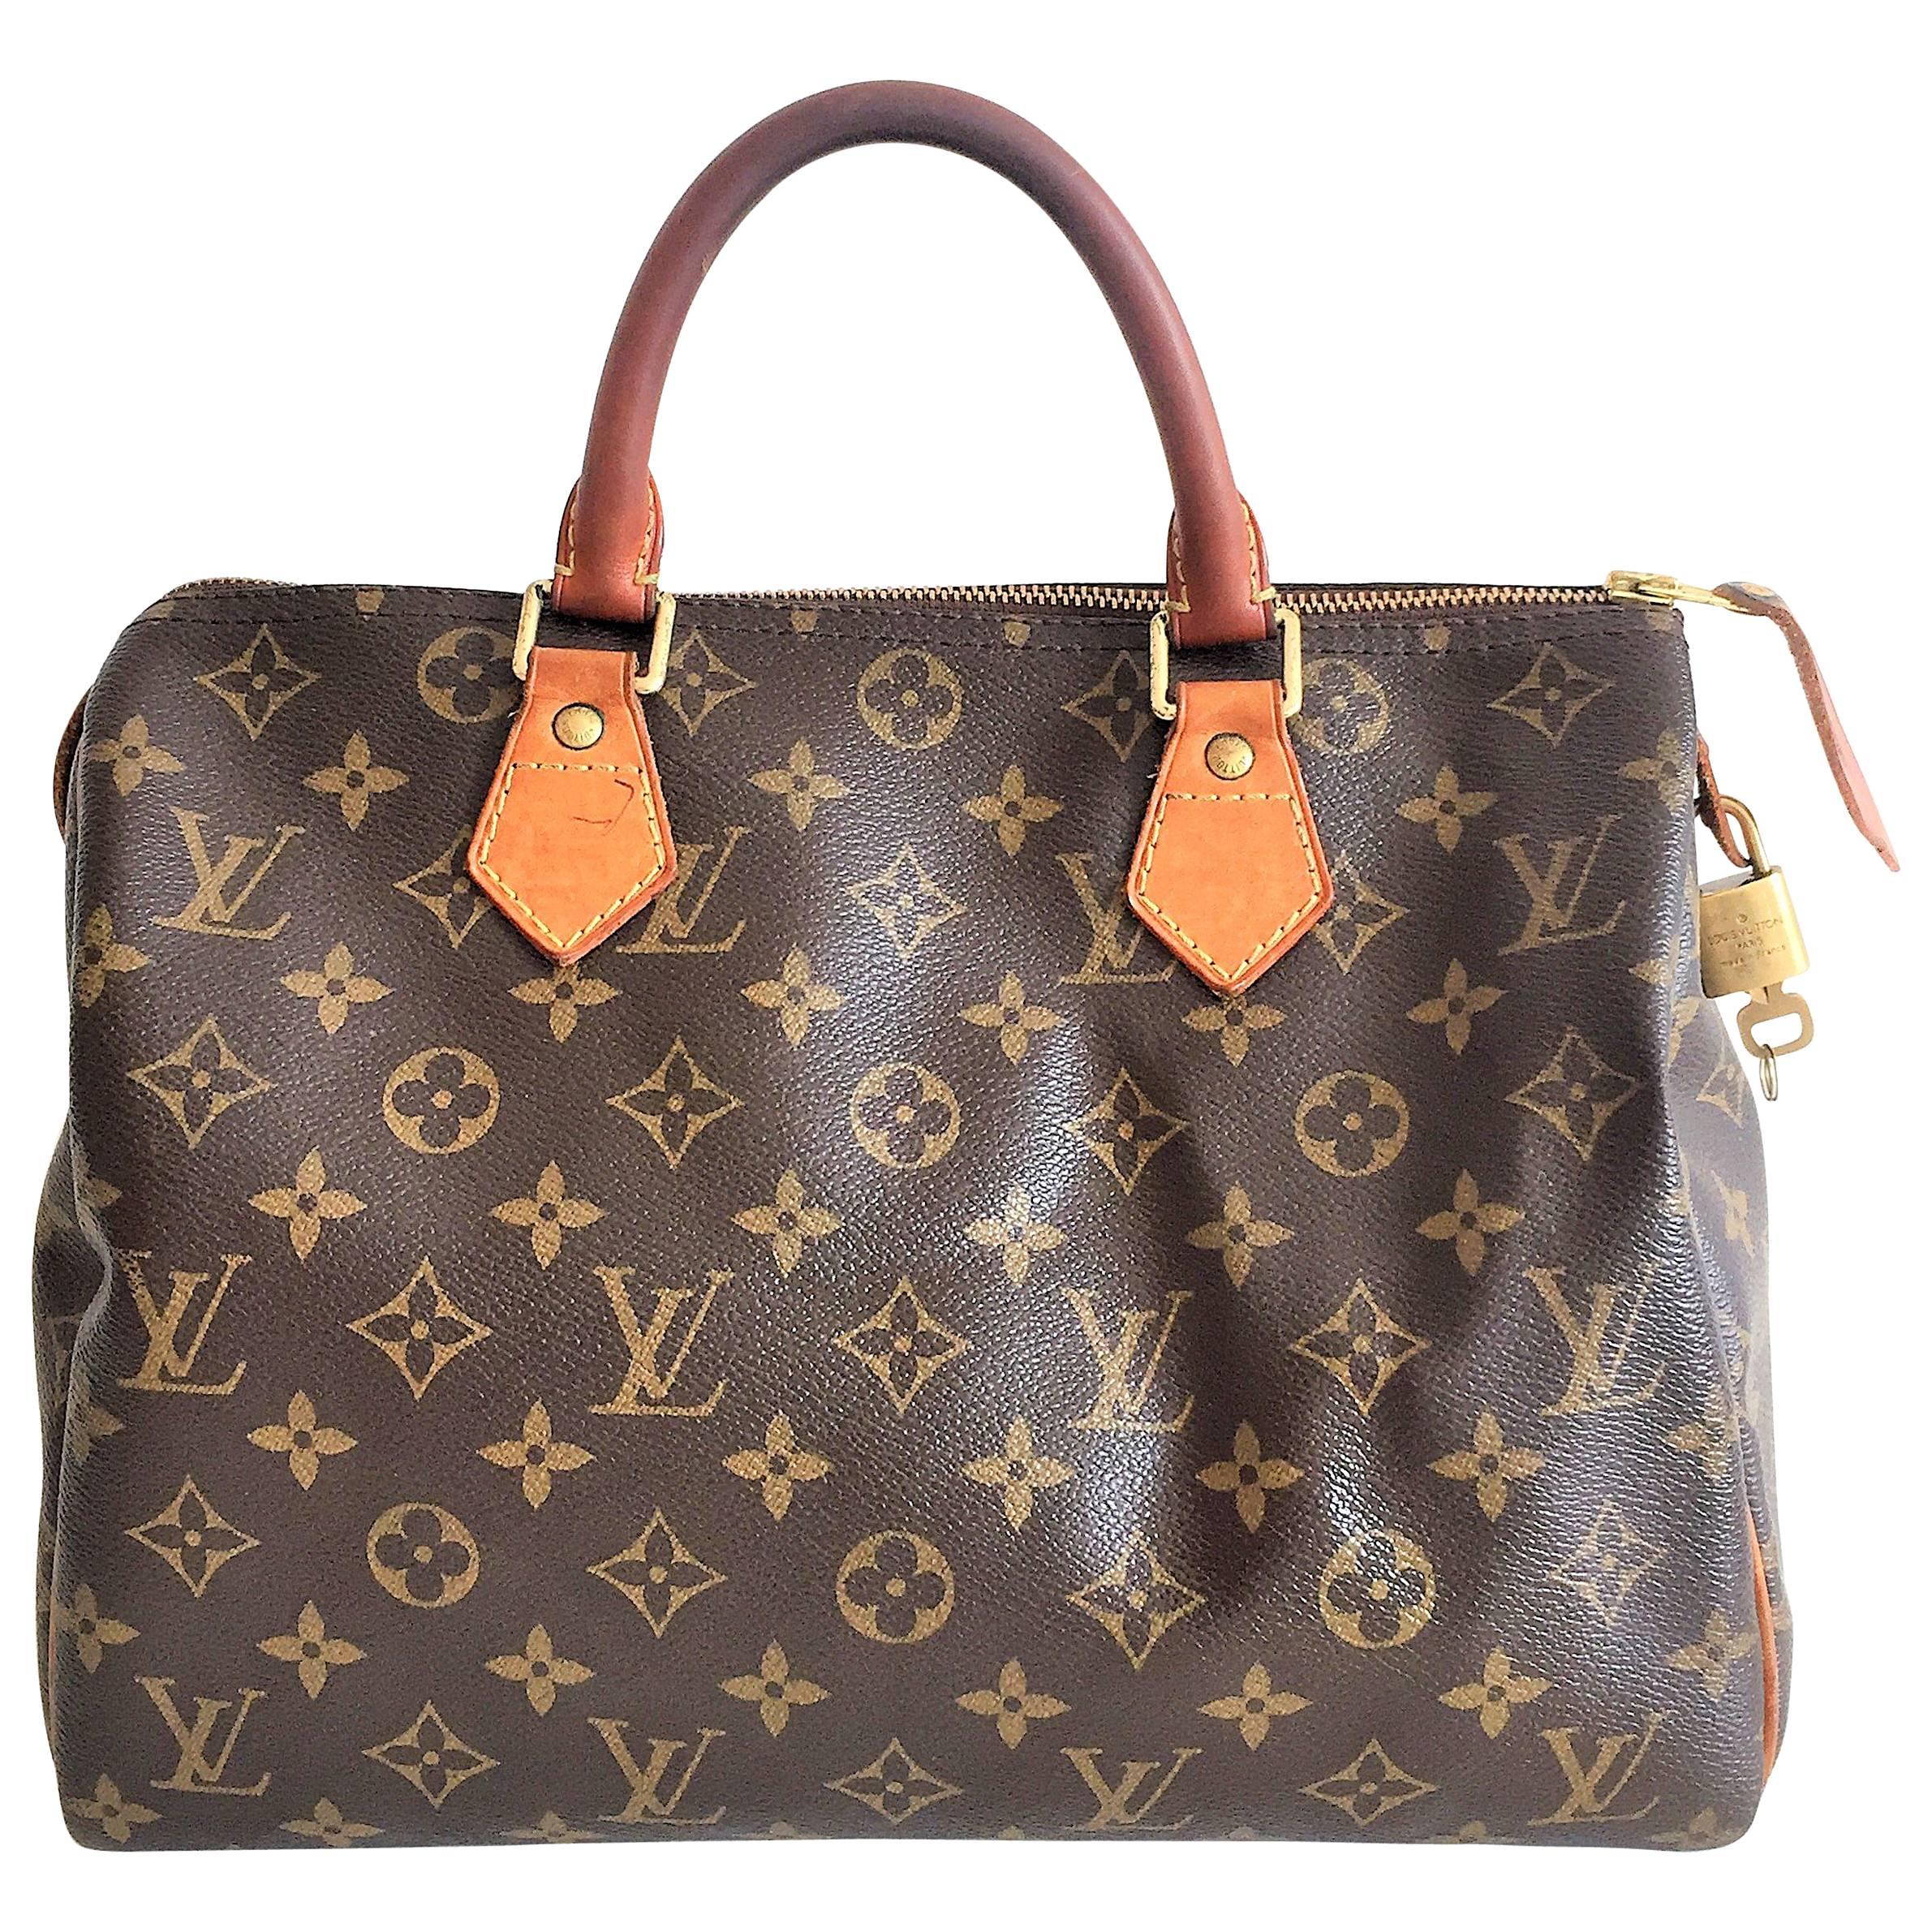 Louis Vuitton Speedy 30 Monogram Handbag Purse For Sale